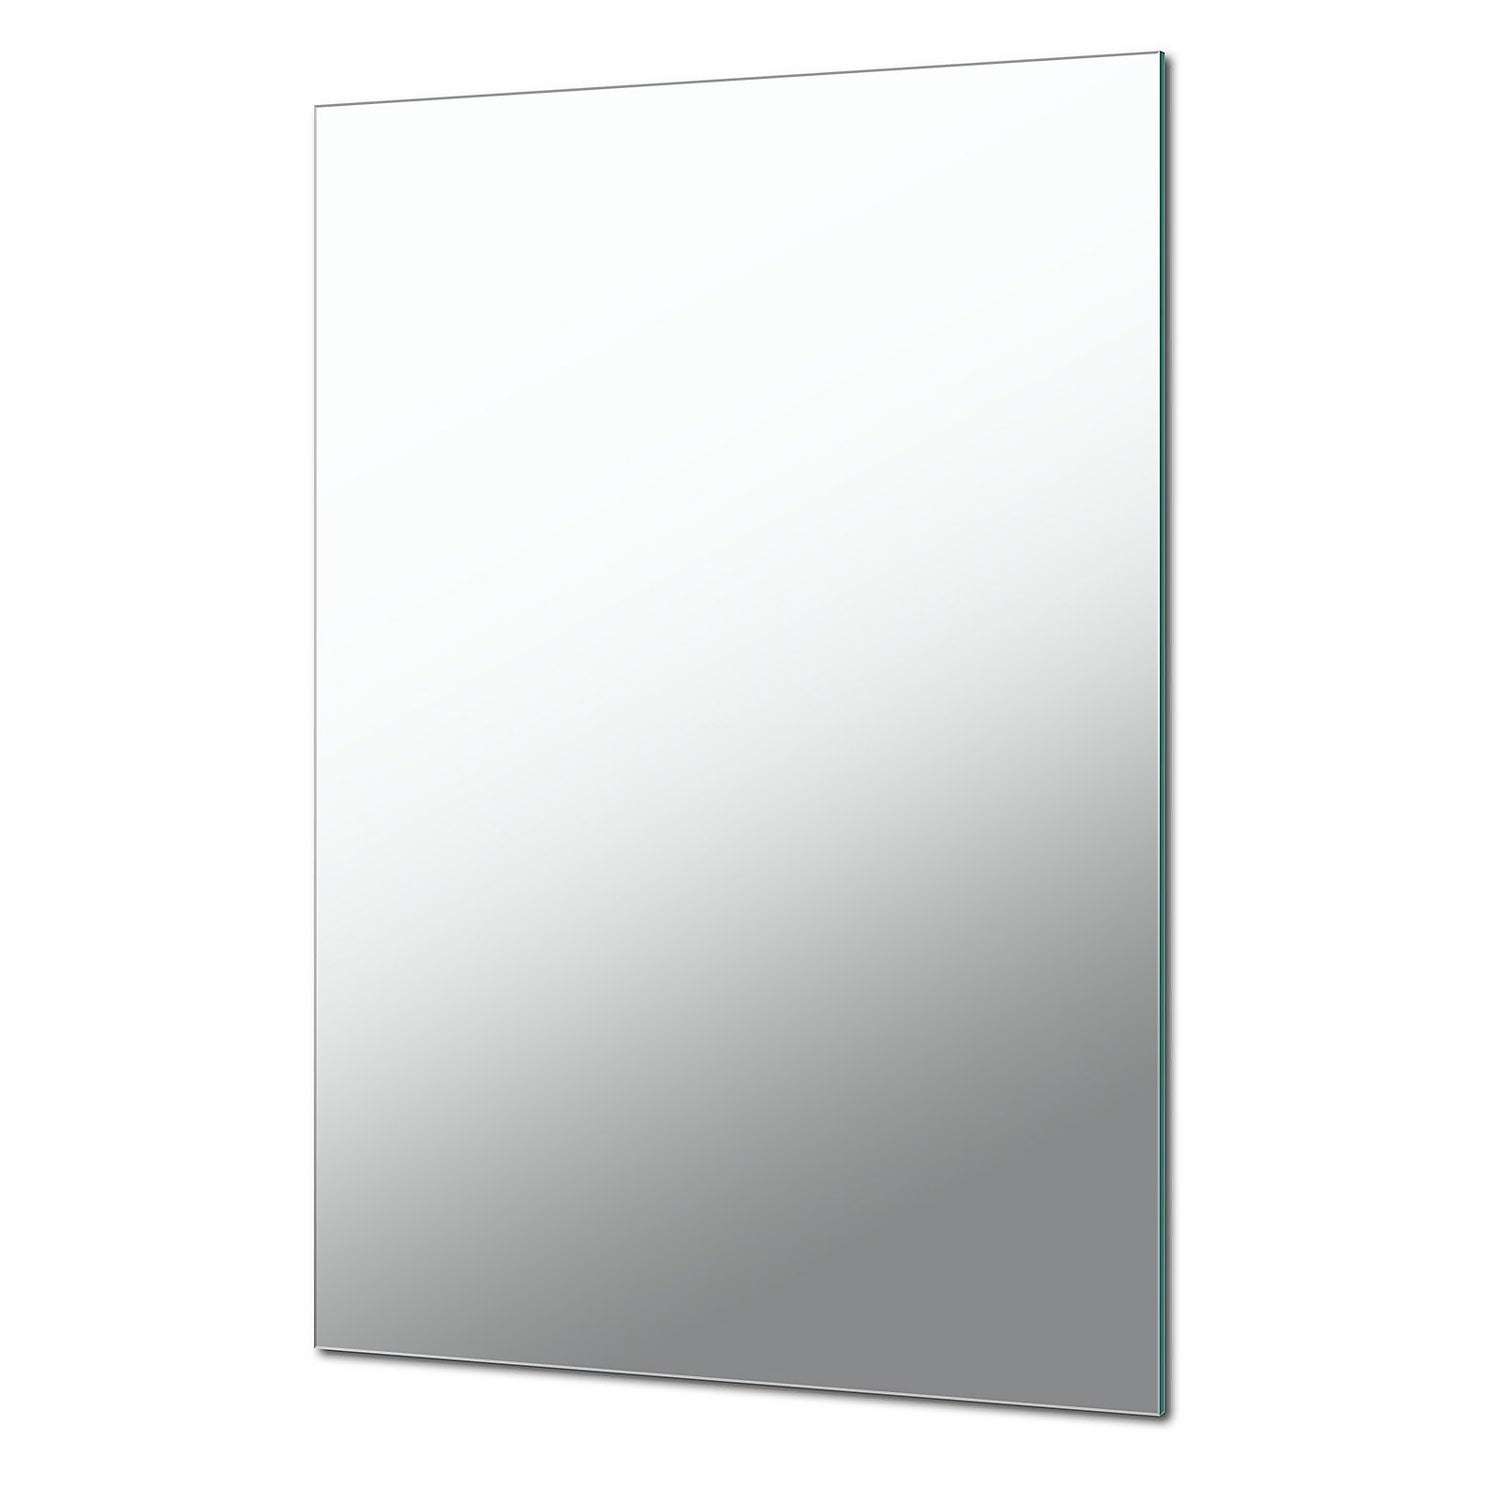 Rectangular Wall Mounted Bathroom Mirror - 60x80cm